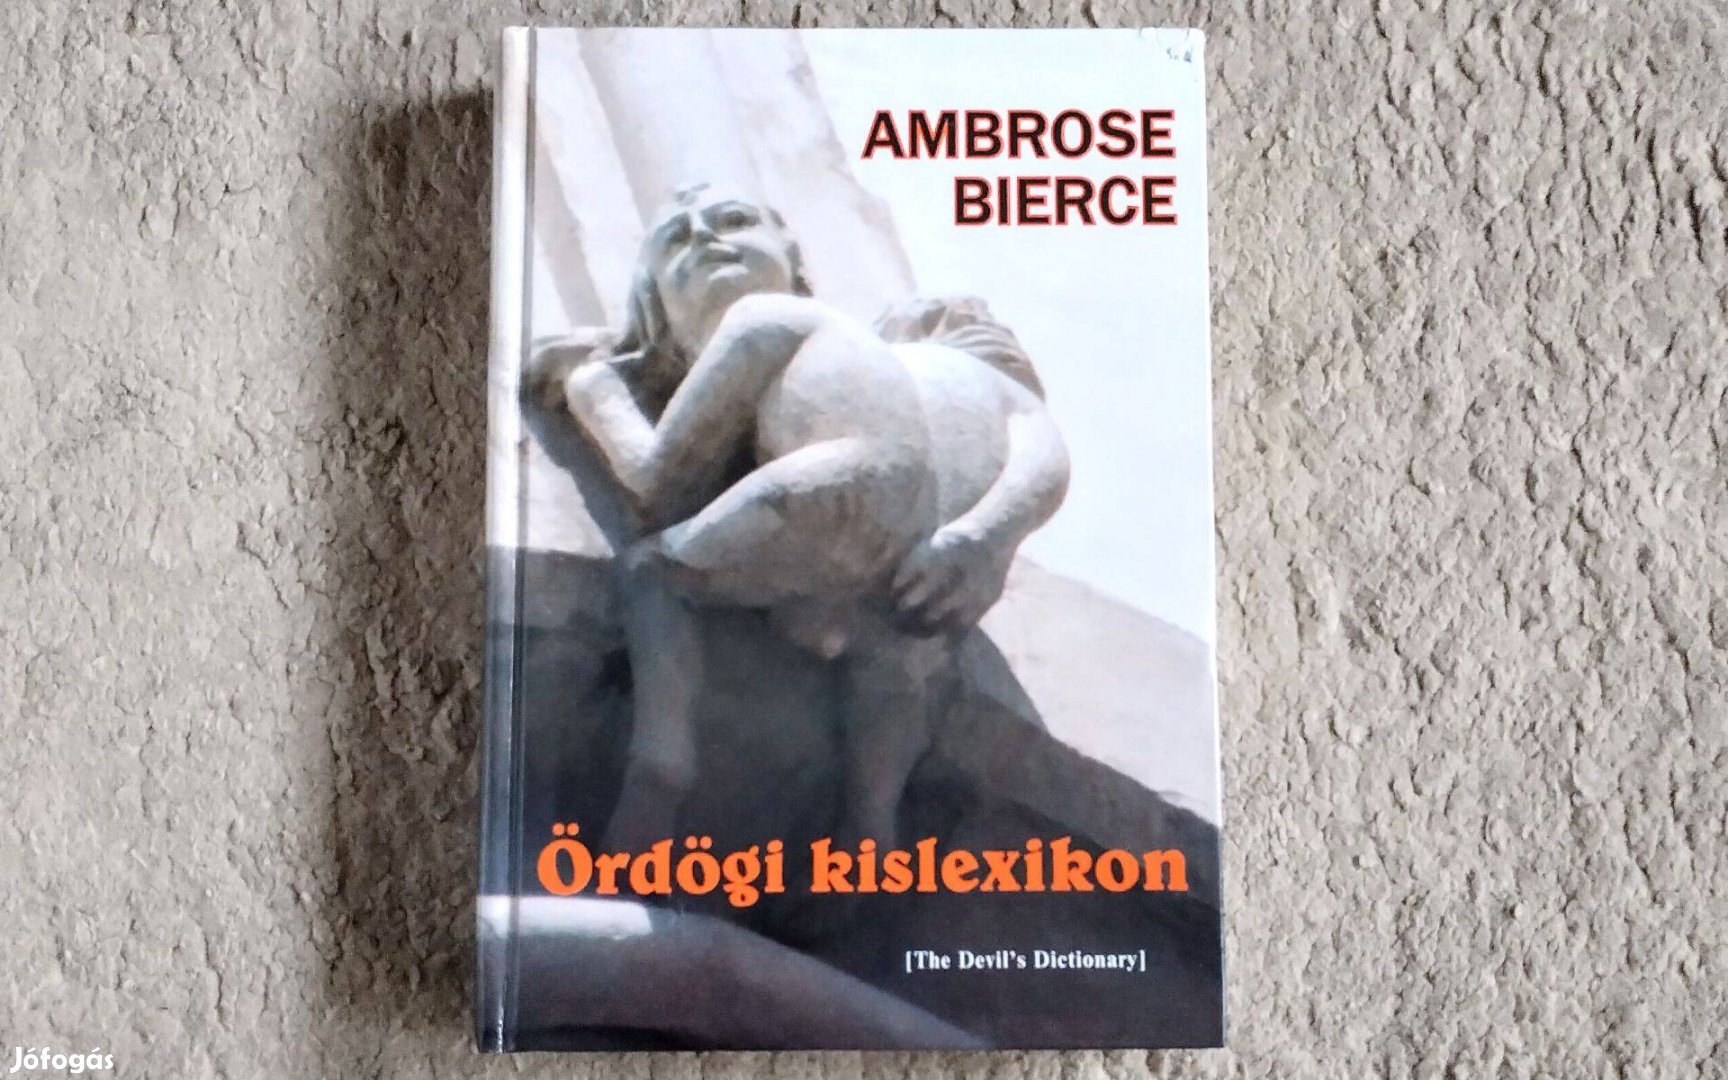 Ördögi kislexikon - Ambrose Bierce (The Devil's Dictionary)